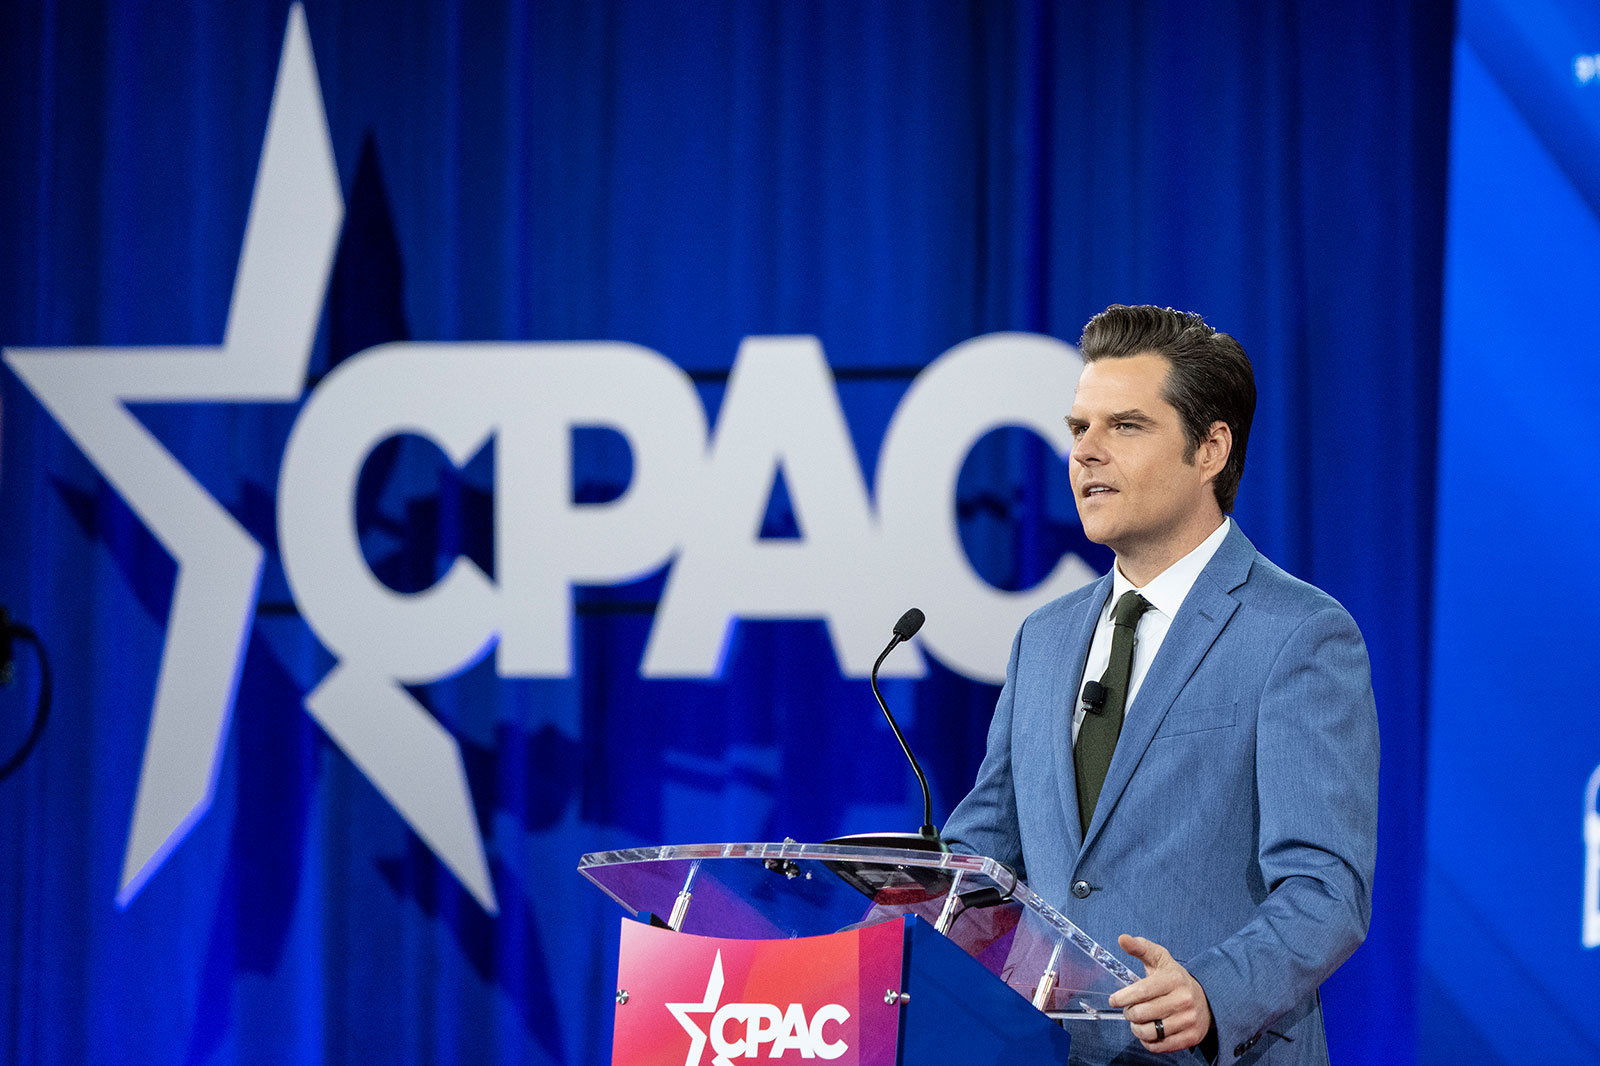 Matt Gaetz speaks at CPAC in Dallas, Texas, on August 6.